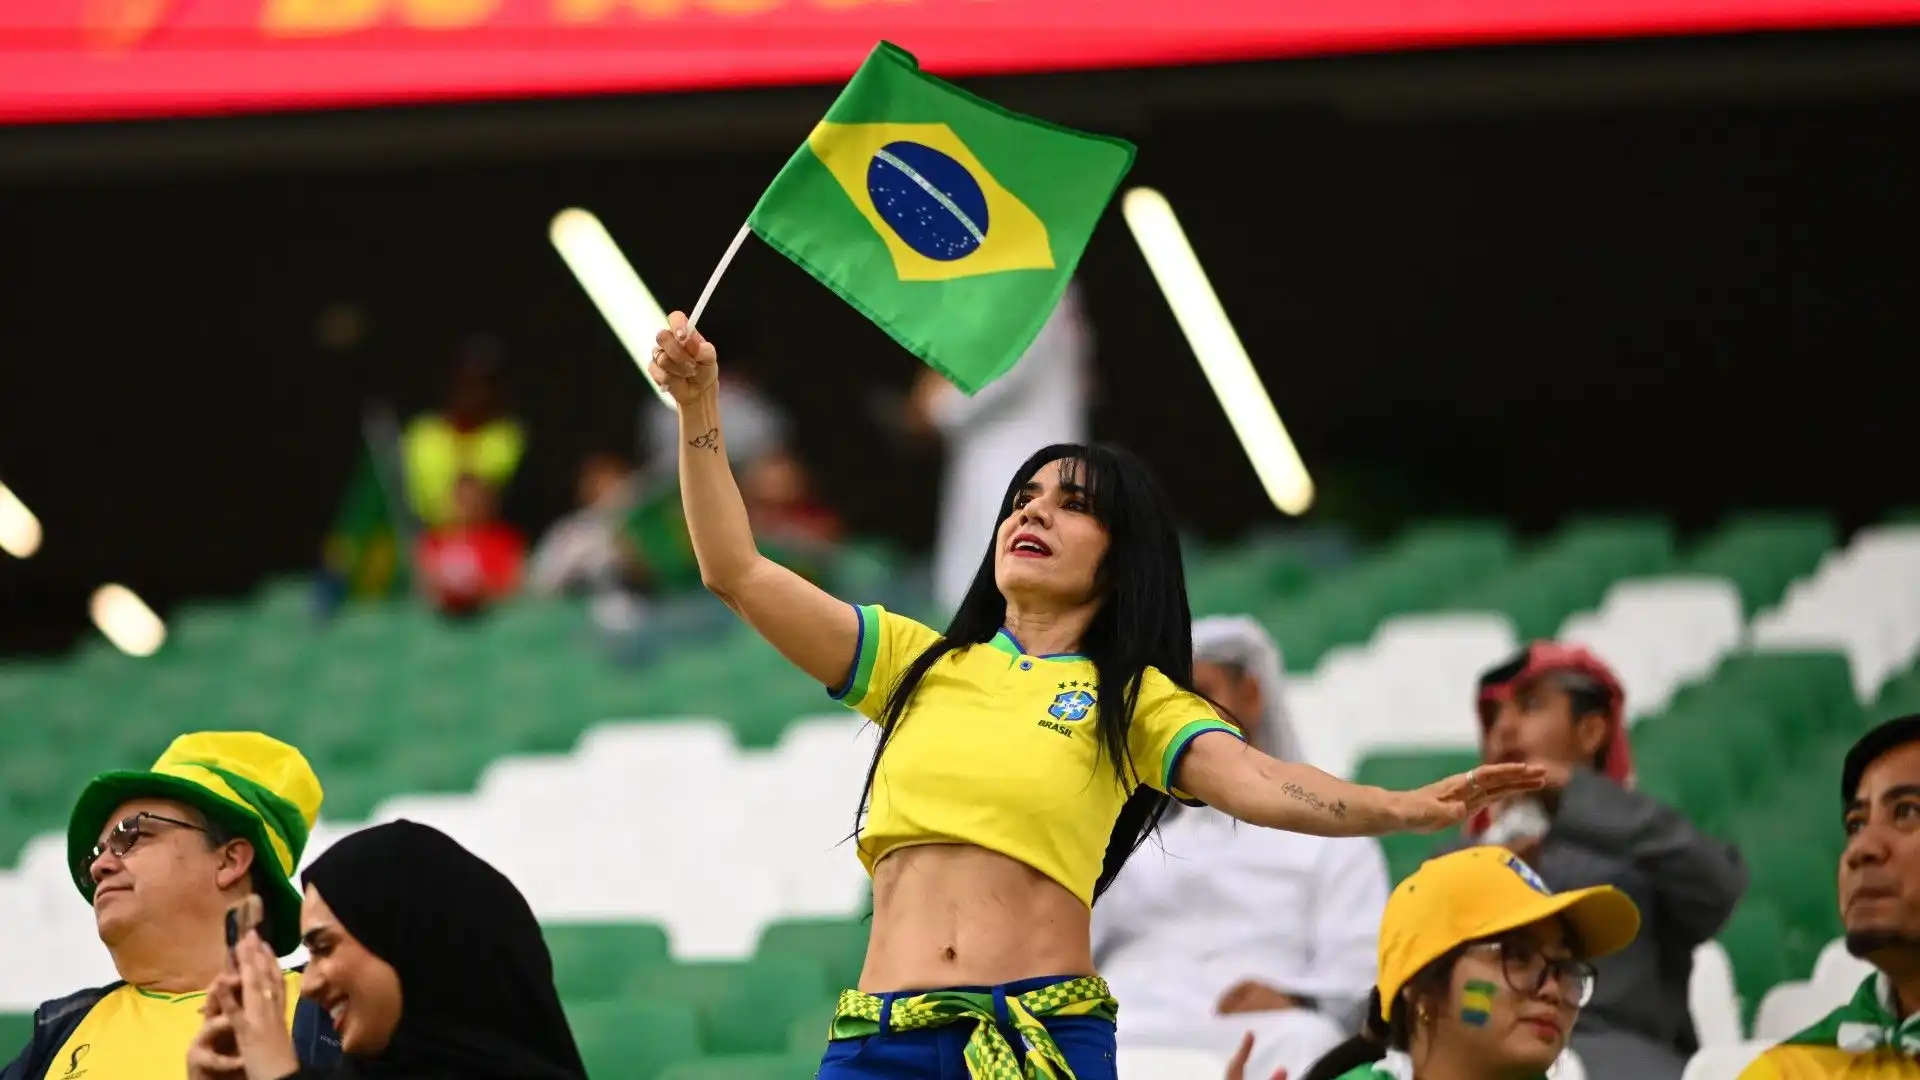 Tantissime le bandiere del Brasile